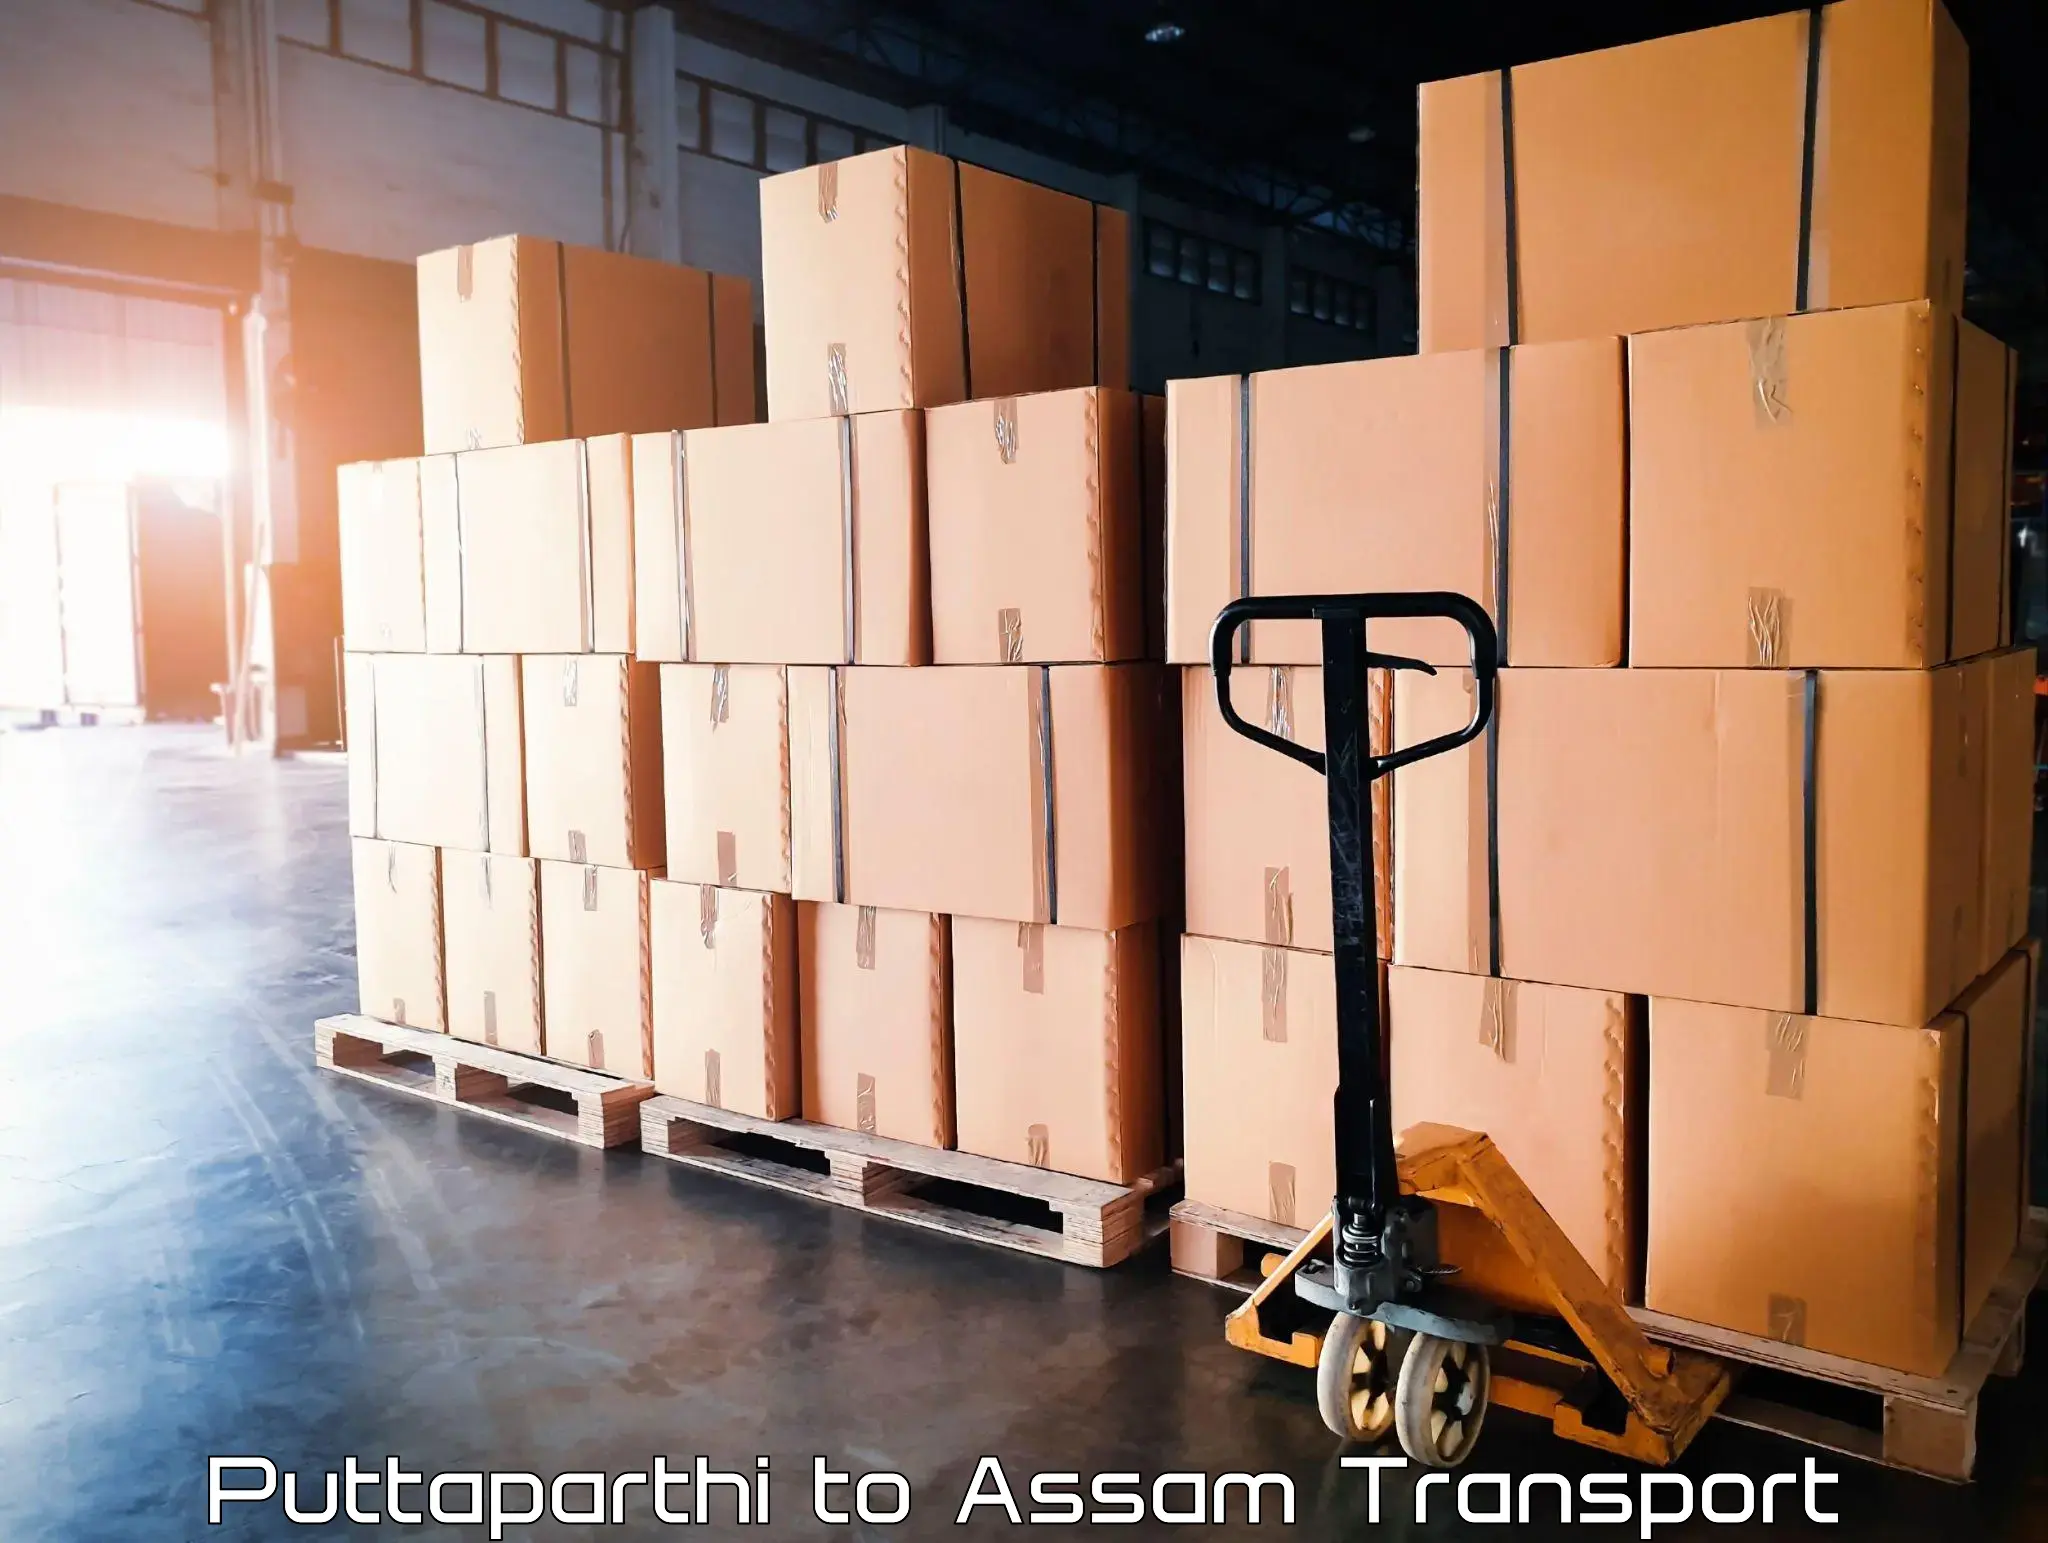 Bike transport service Puttaparthi to Assam